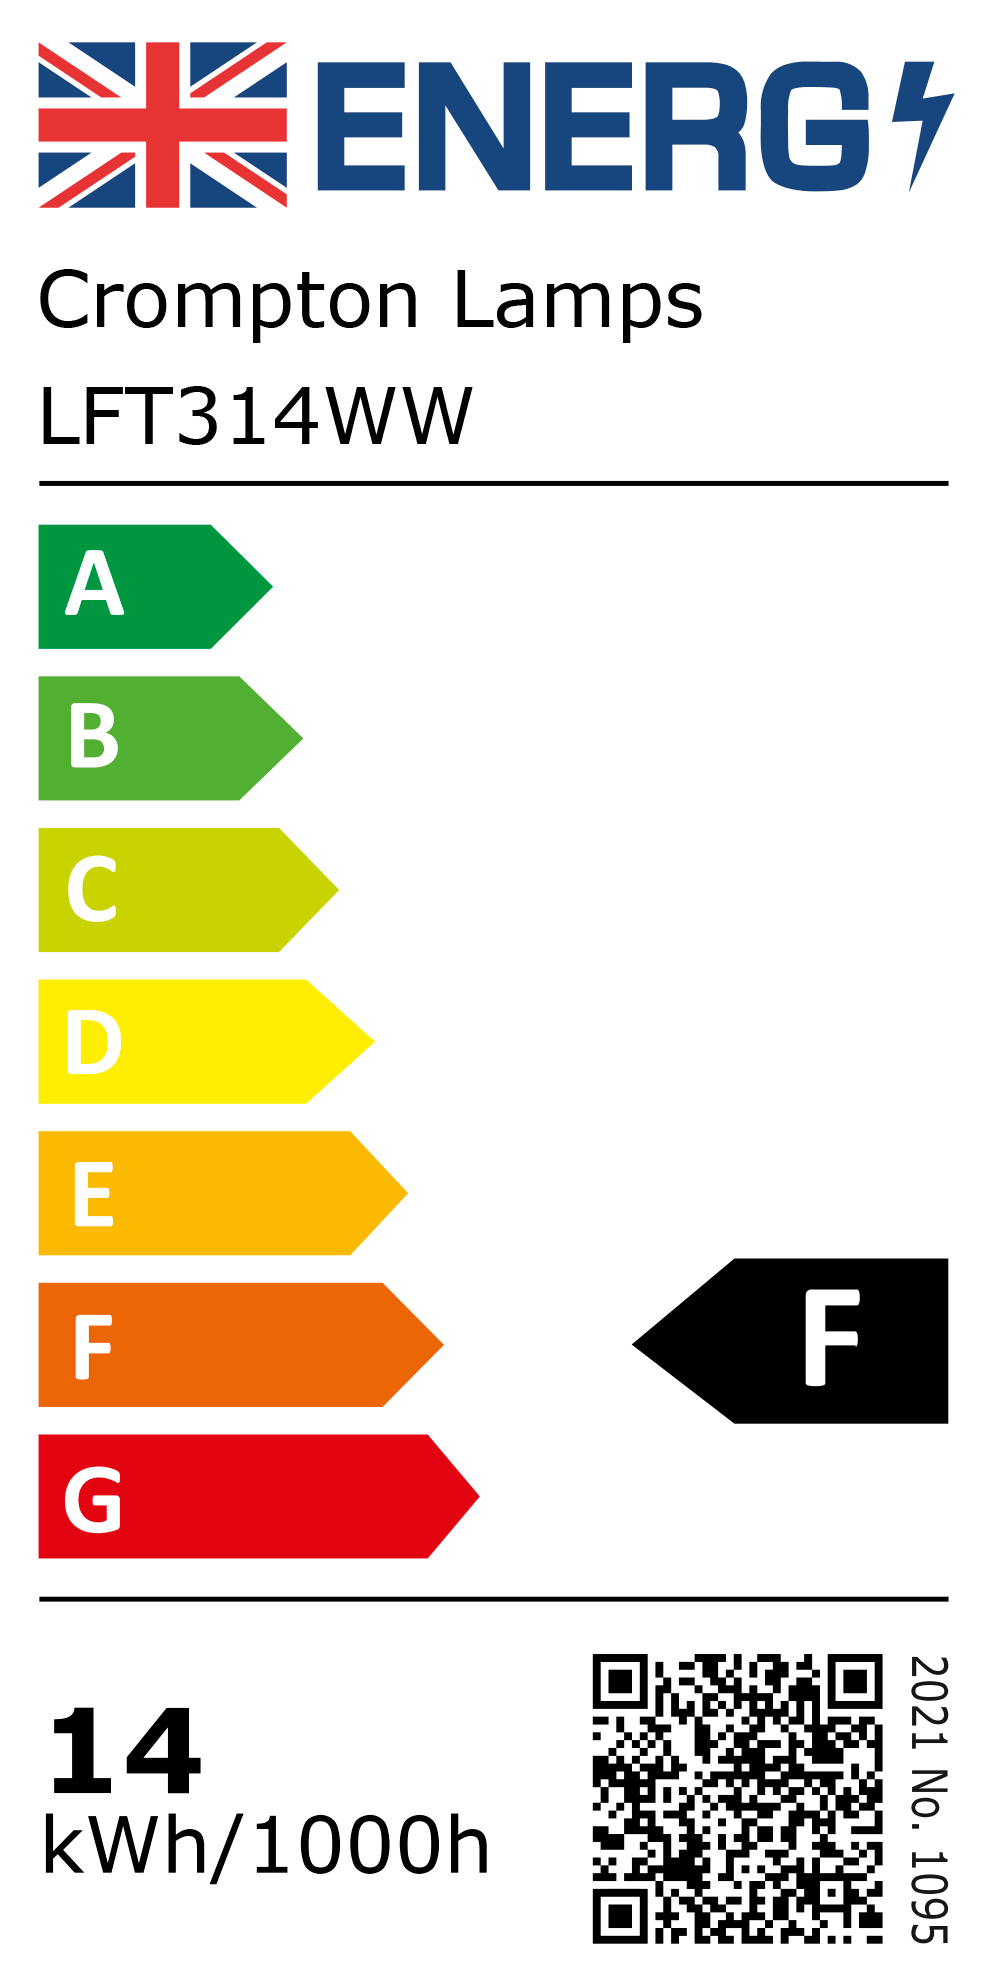 New 2021 Energy Rating Label: Stock Code LFT314WW